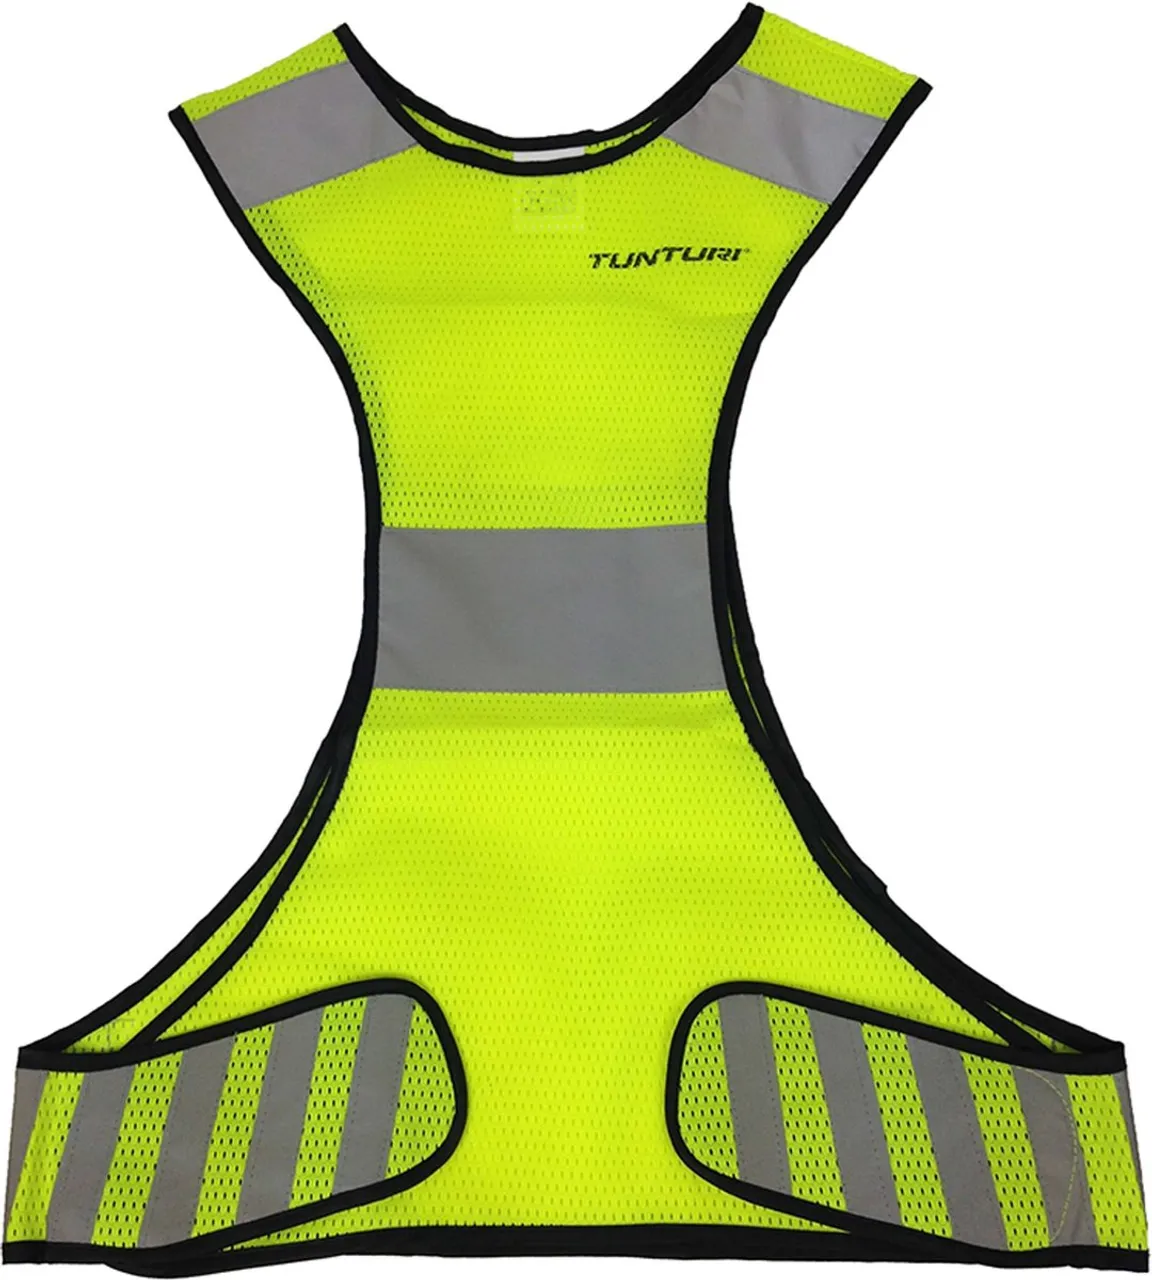 X-shape Running Vest - X-vorm hardloopvest - Jogging reflectie vest Veiligheidsvest - Safety Vest - Veiligheidshesje - Hardloop veiligheidsvest - Refl...